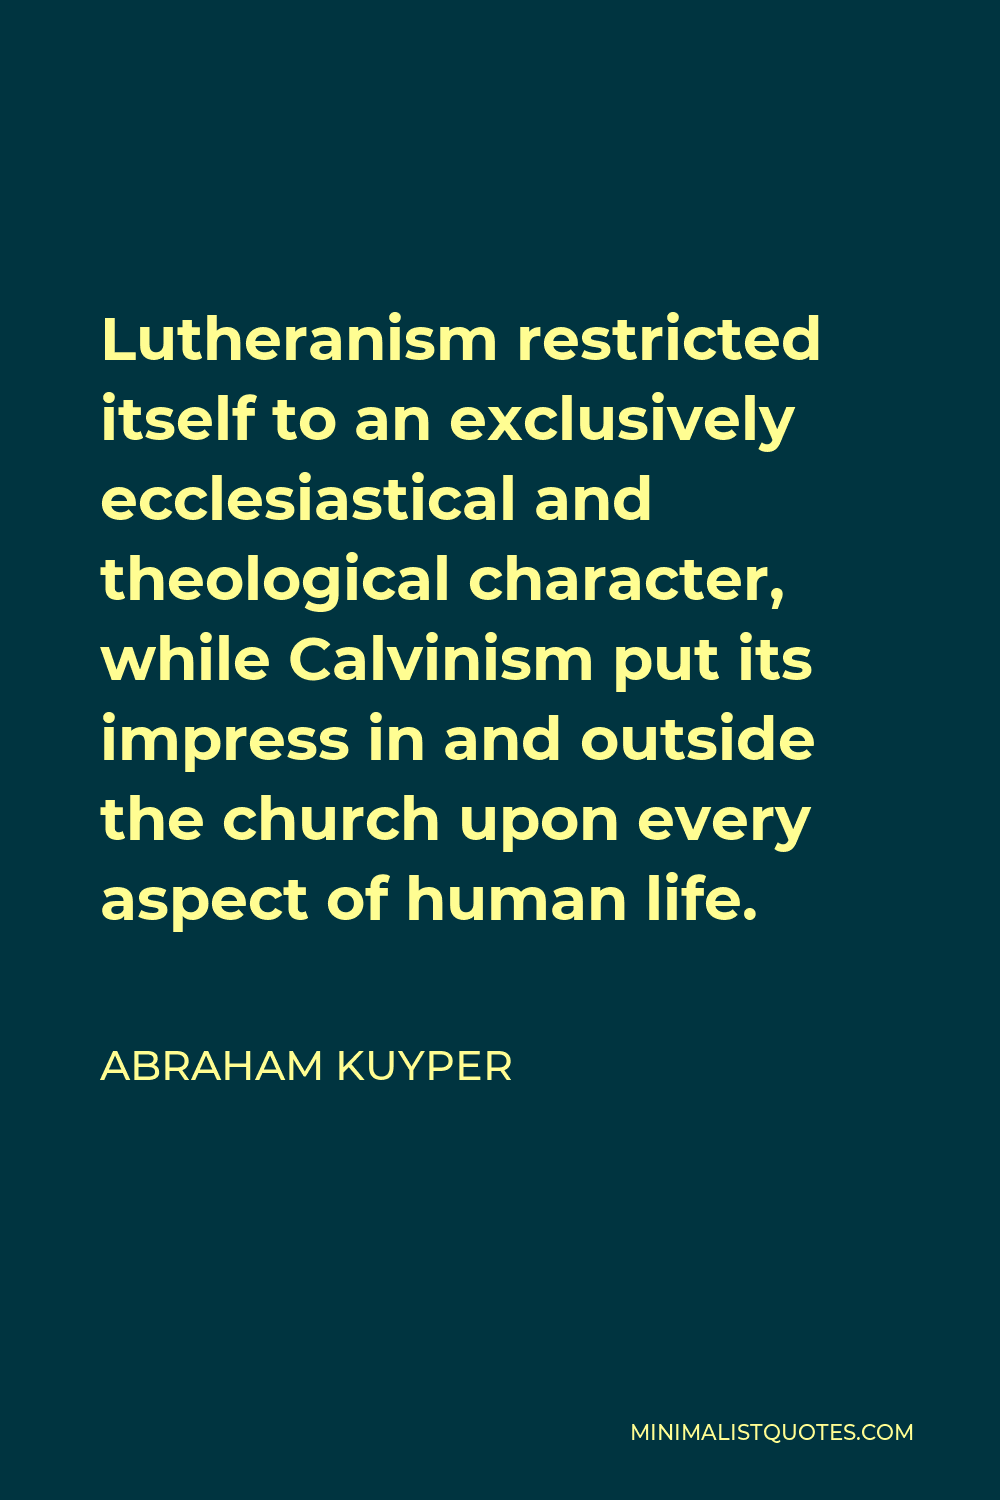 calvinism vs lutheranism